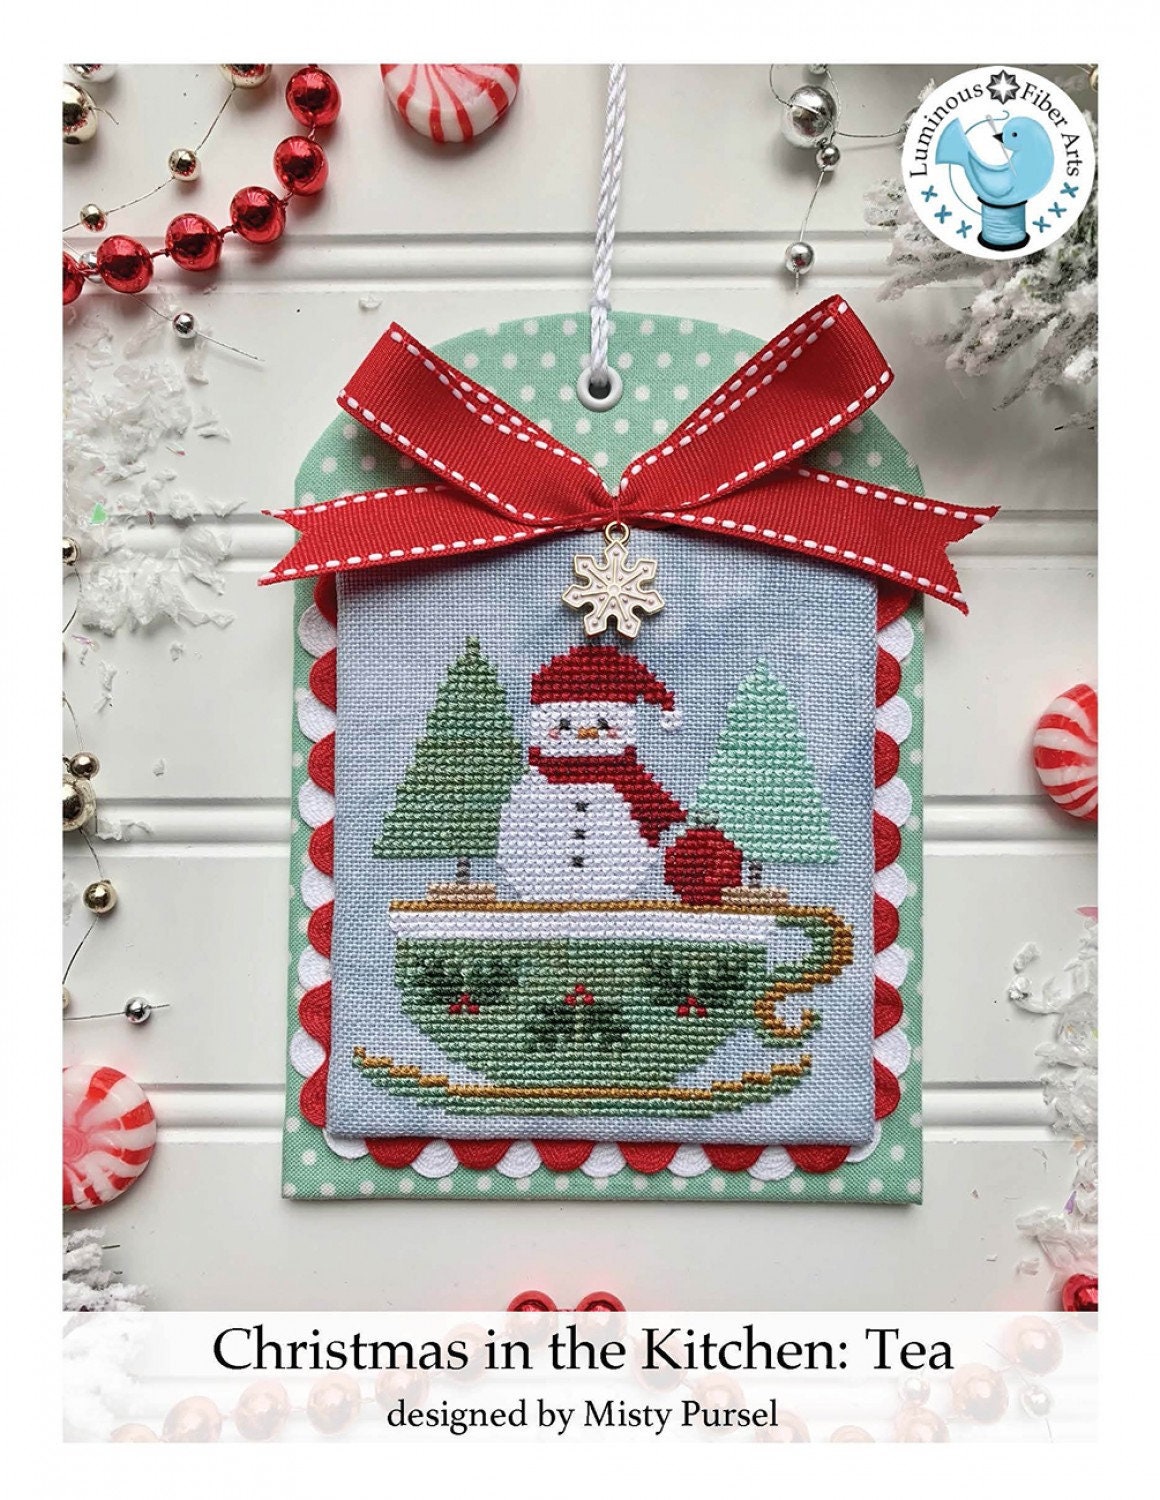 Christmas Tree Cross Stitch Ornament Kit Beginners Mini Counted